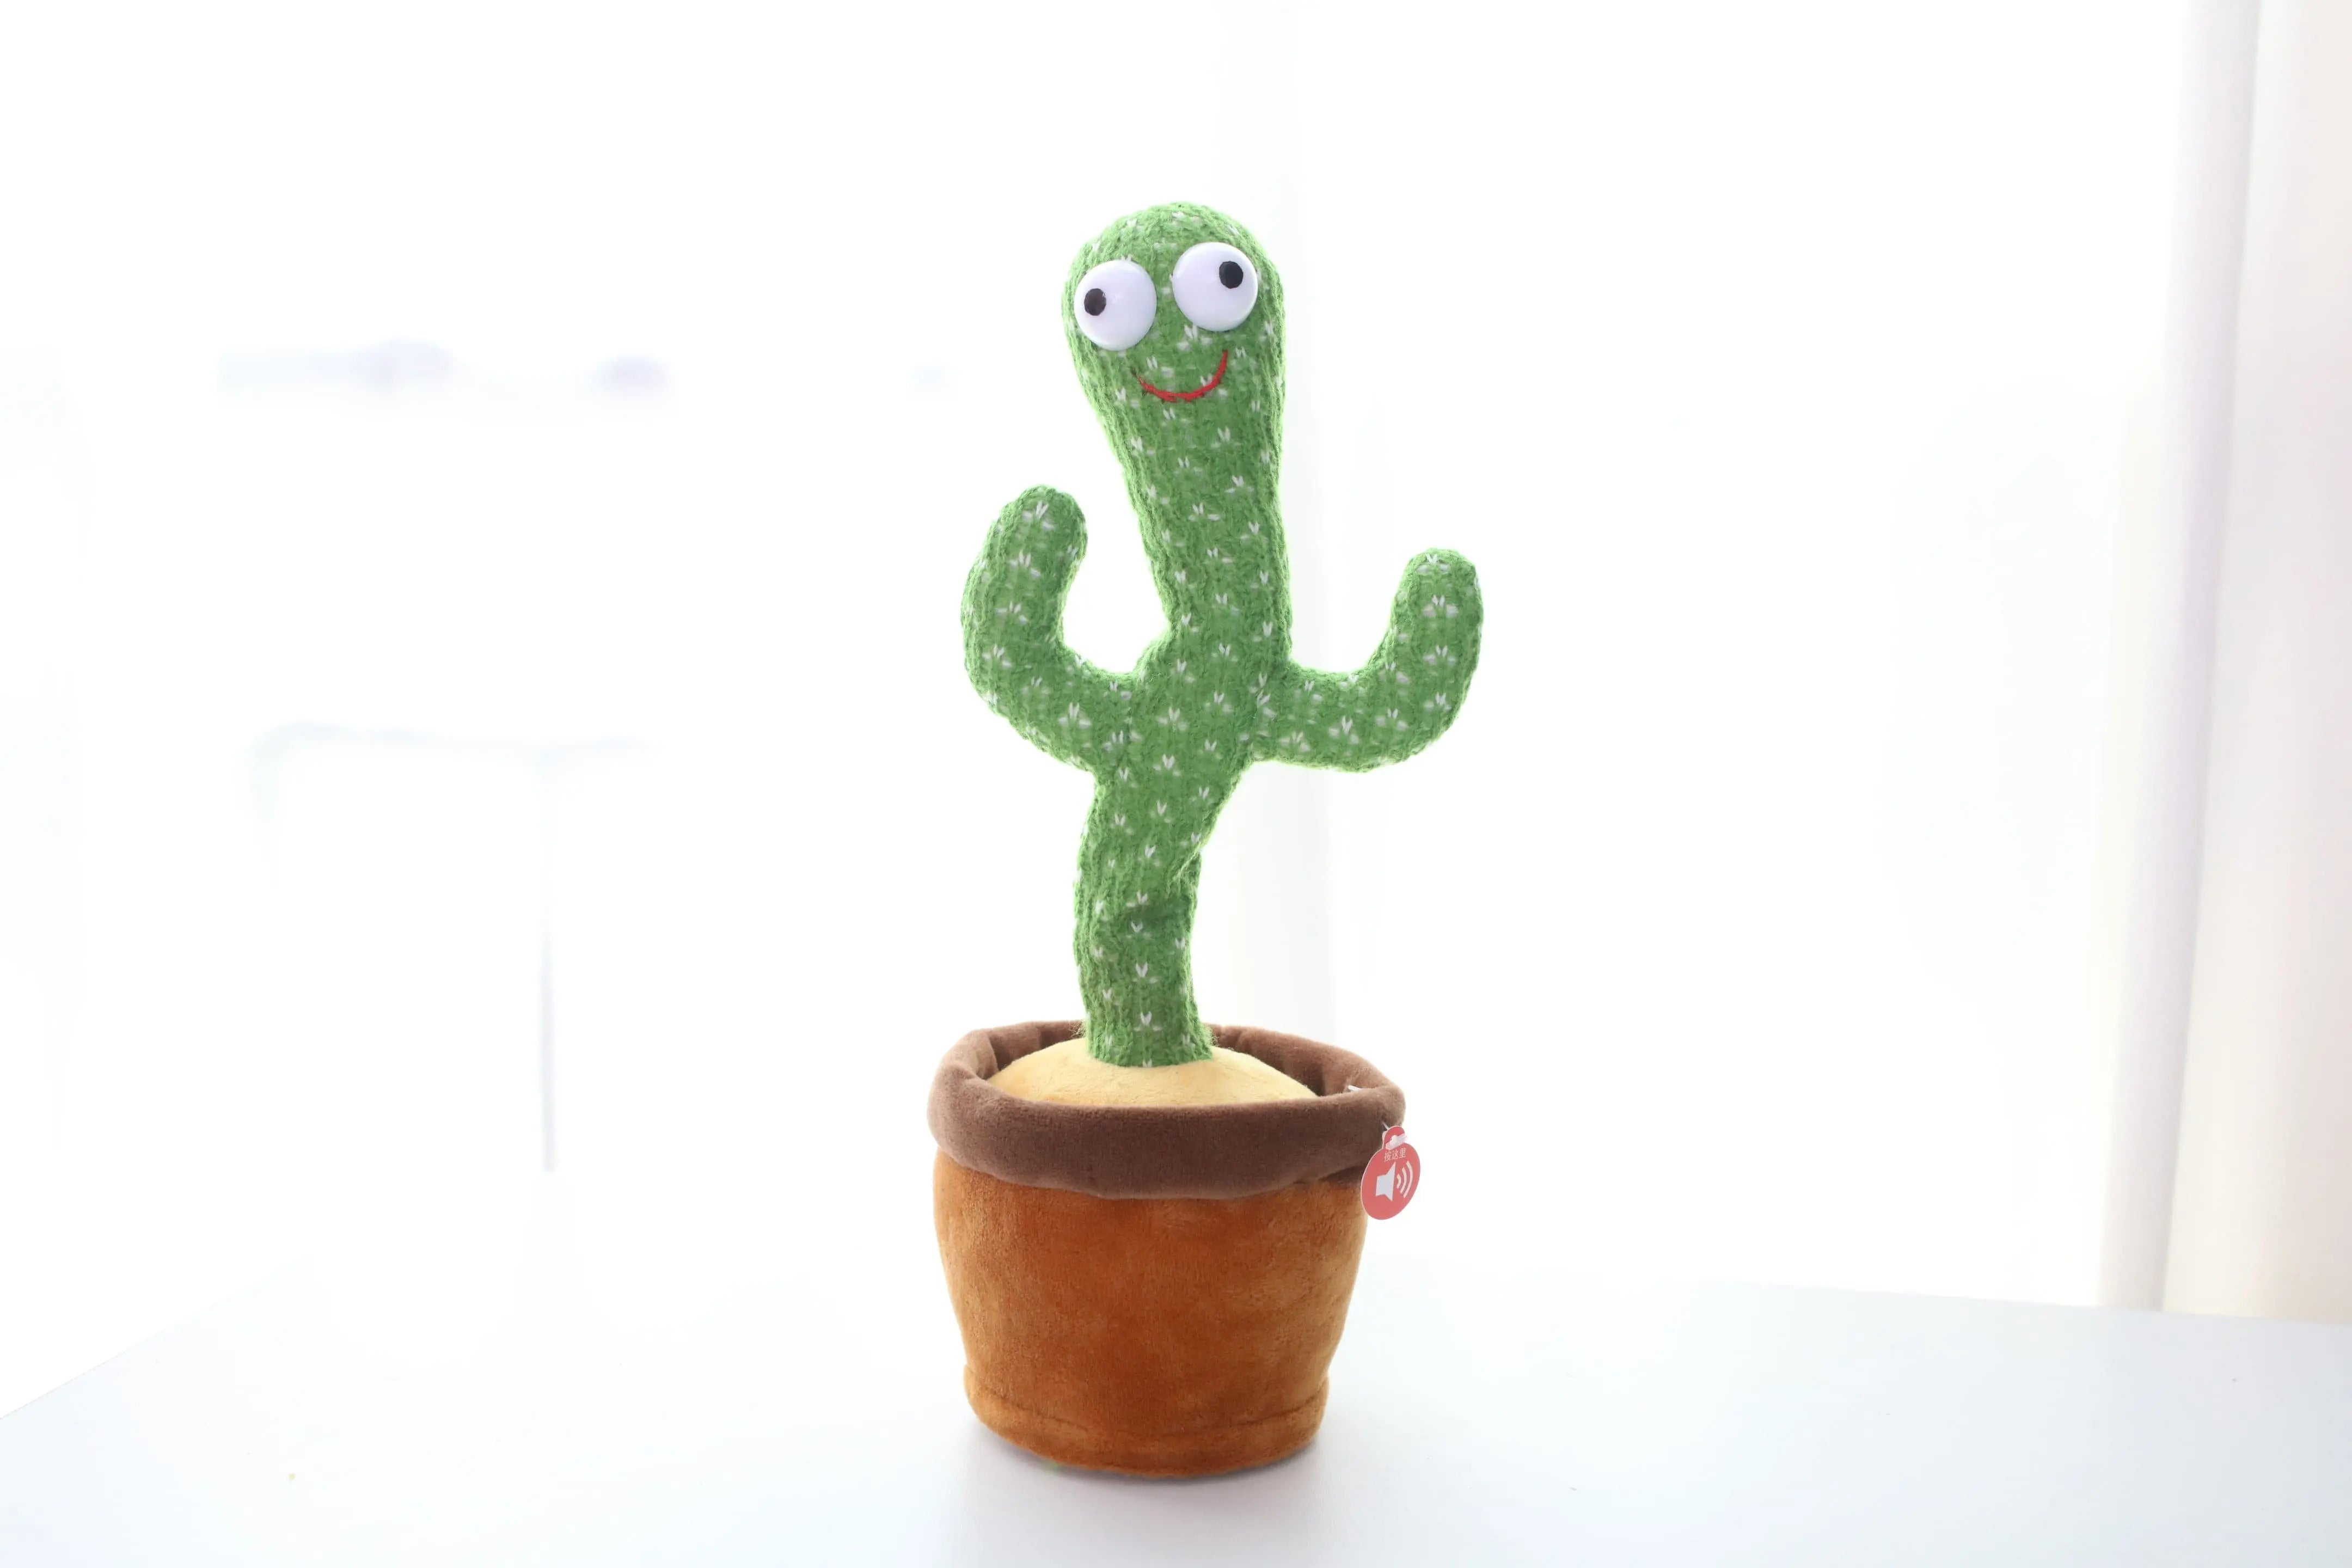 Dancing Cactus Toy - Dancing Cactus Shop